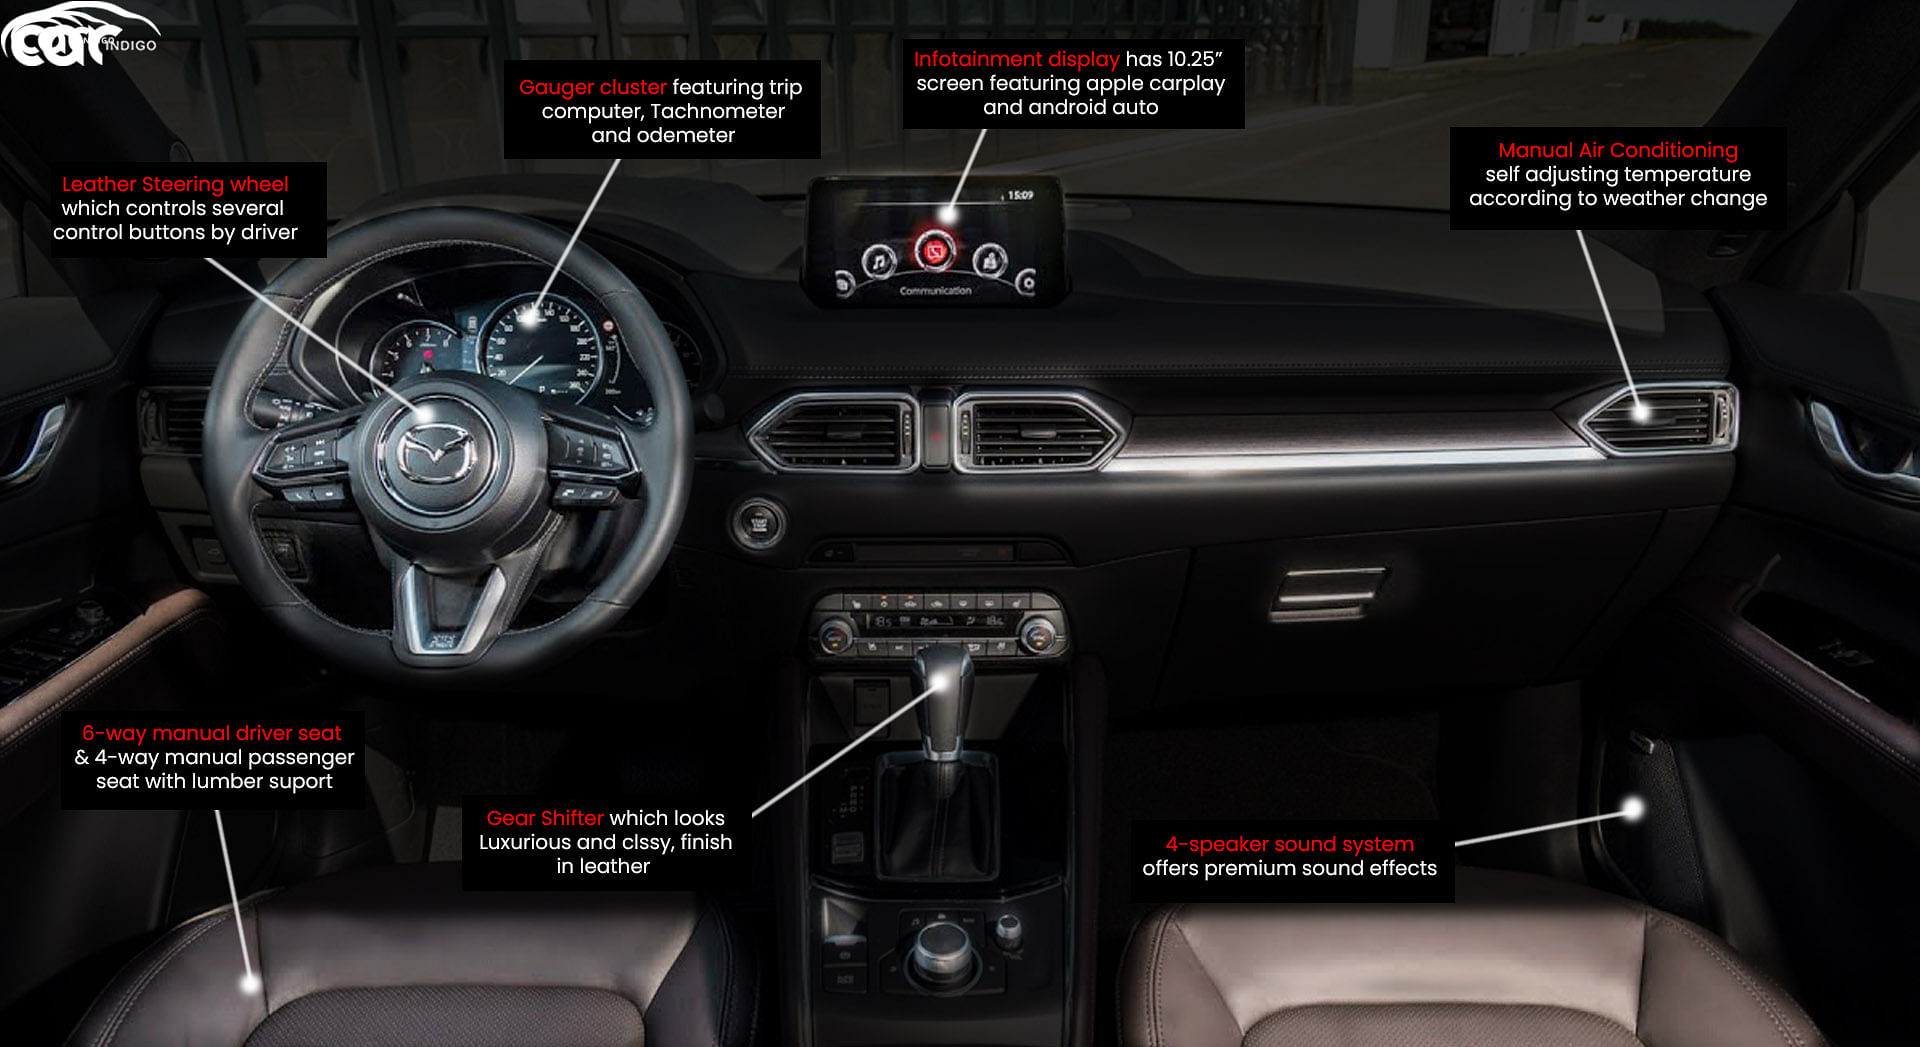 2020 Mazda Cx-5 Interior Review - Seating, Infotainment, Dashboard And  Features | Carindigo.Com